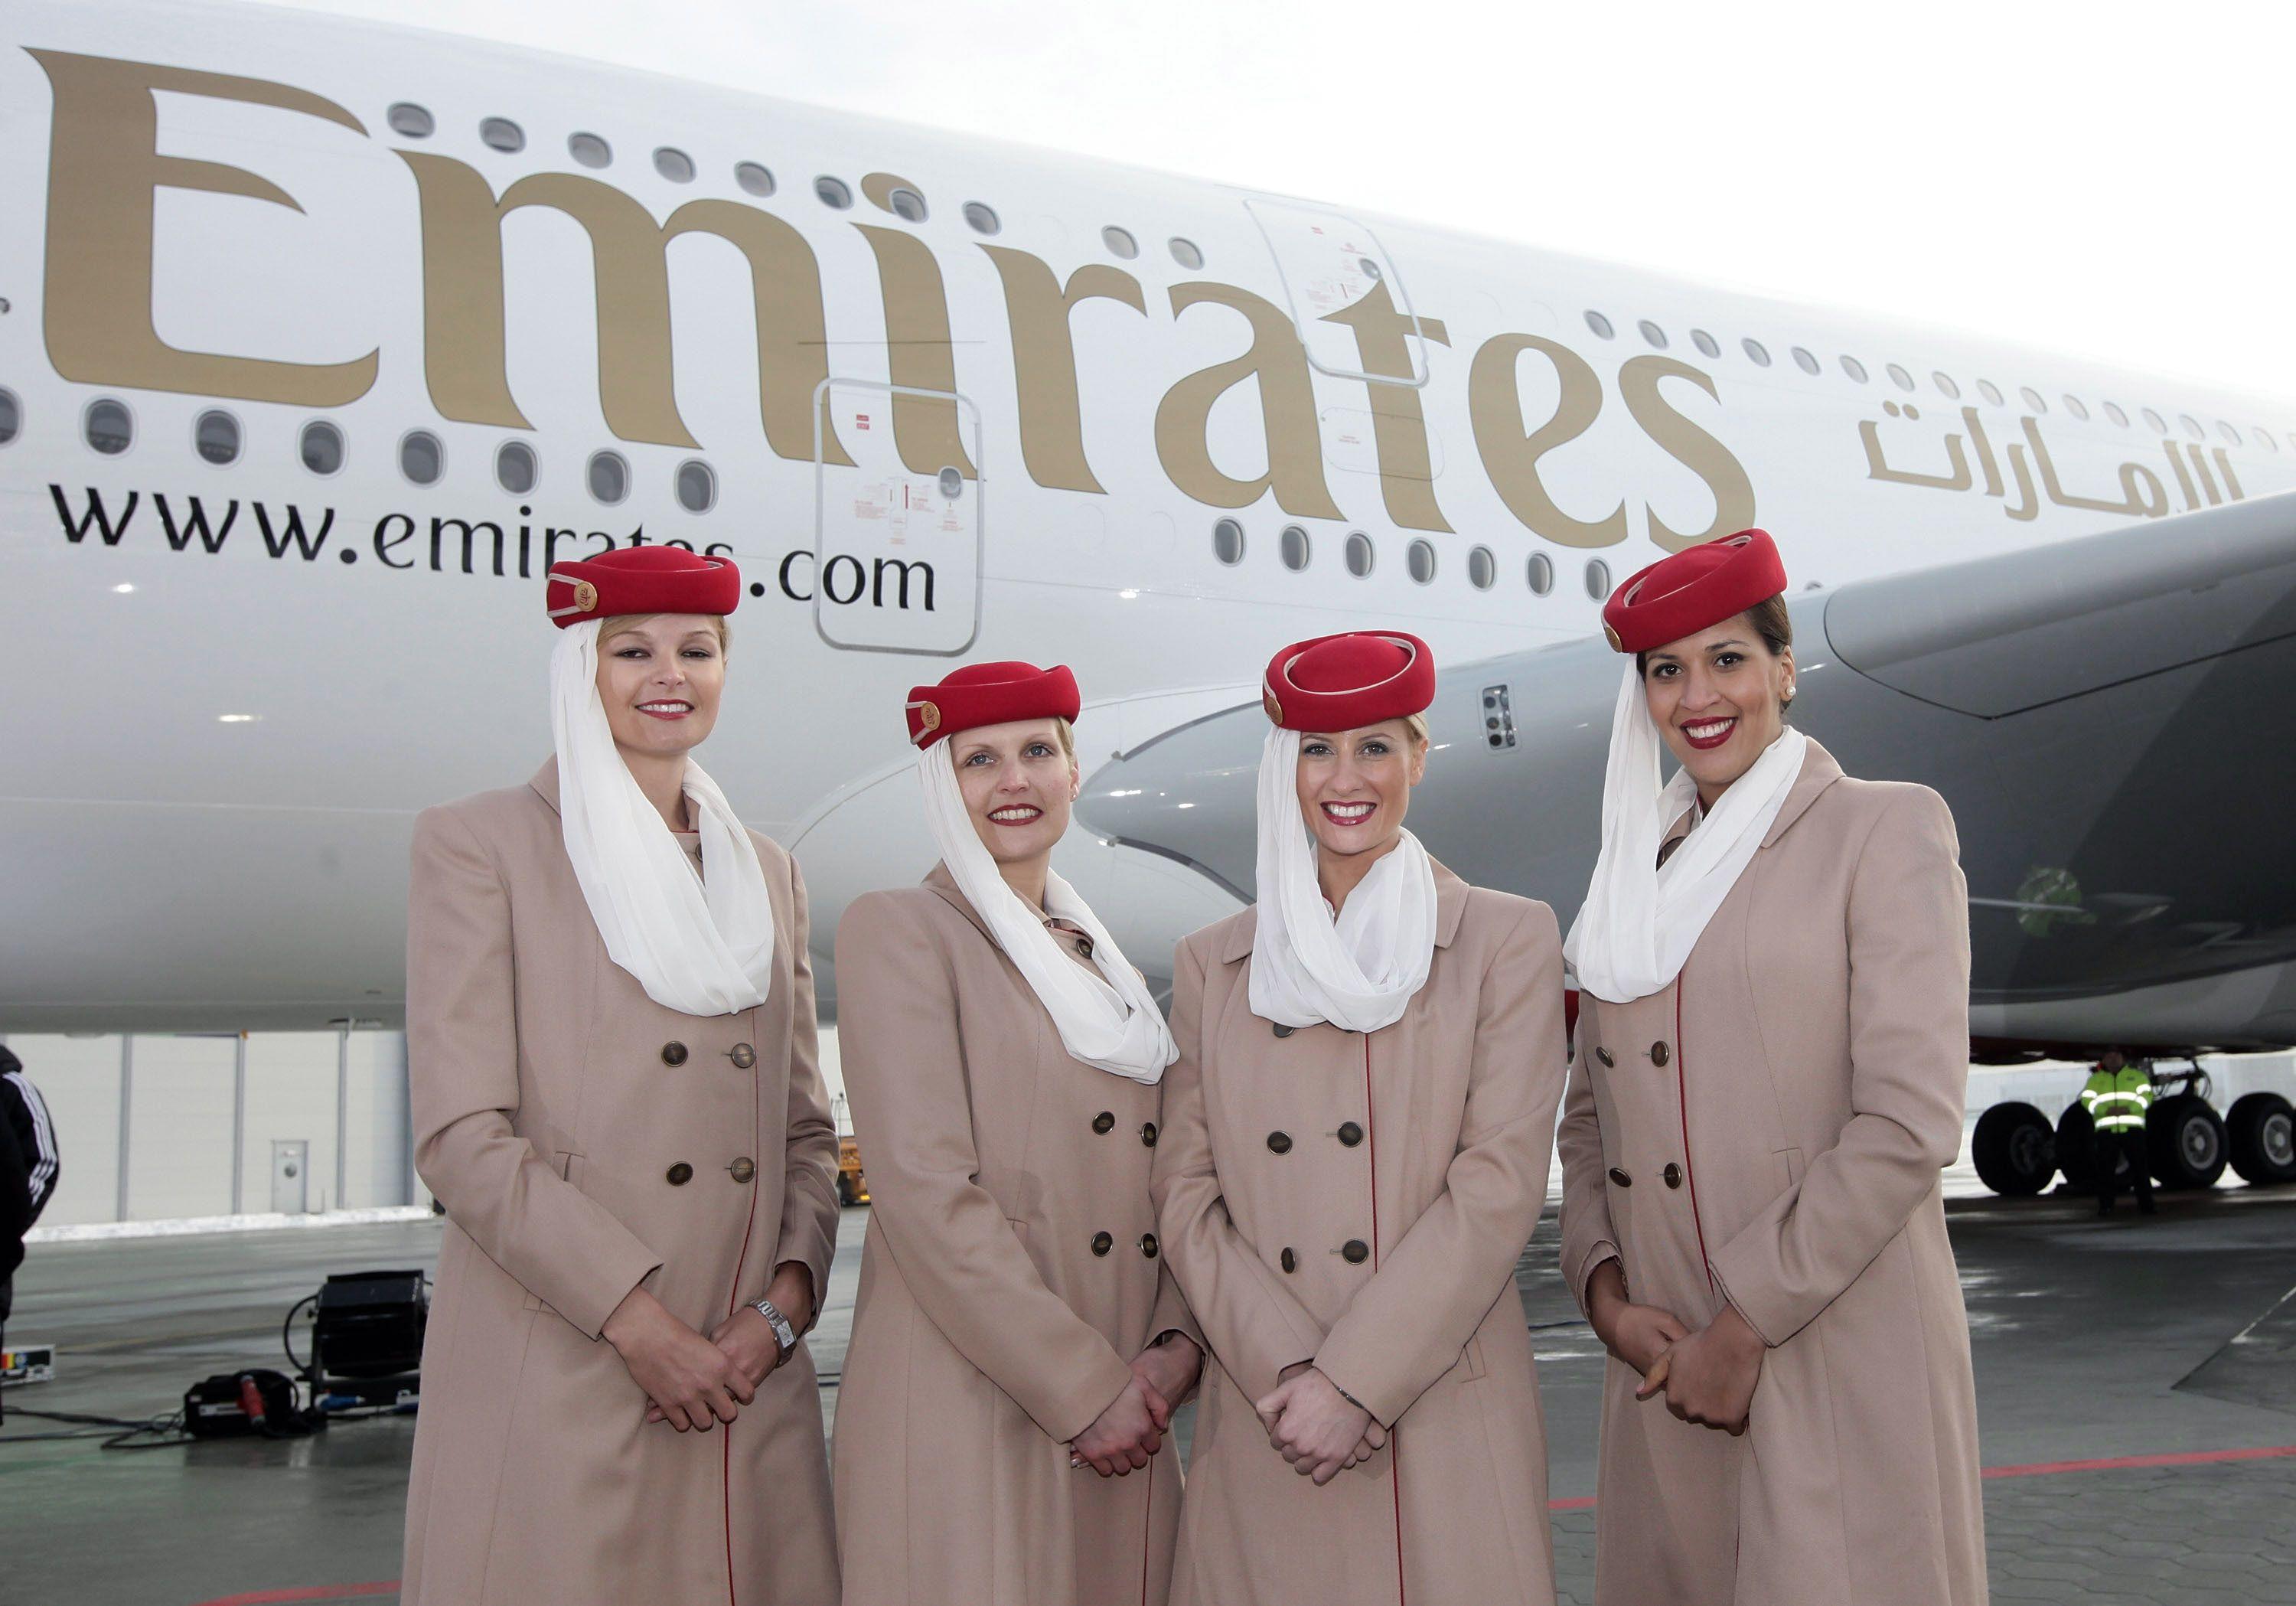 Emirates on new recruitment drive for cabin crew staff Arabianbusiness